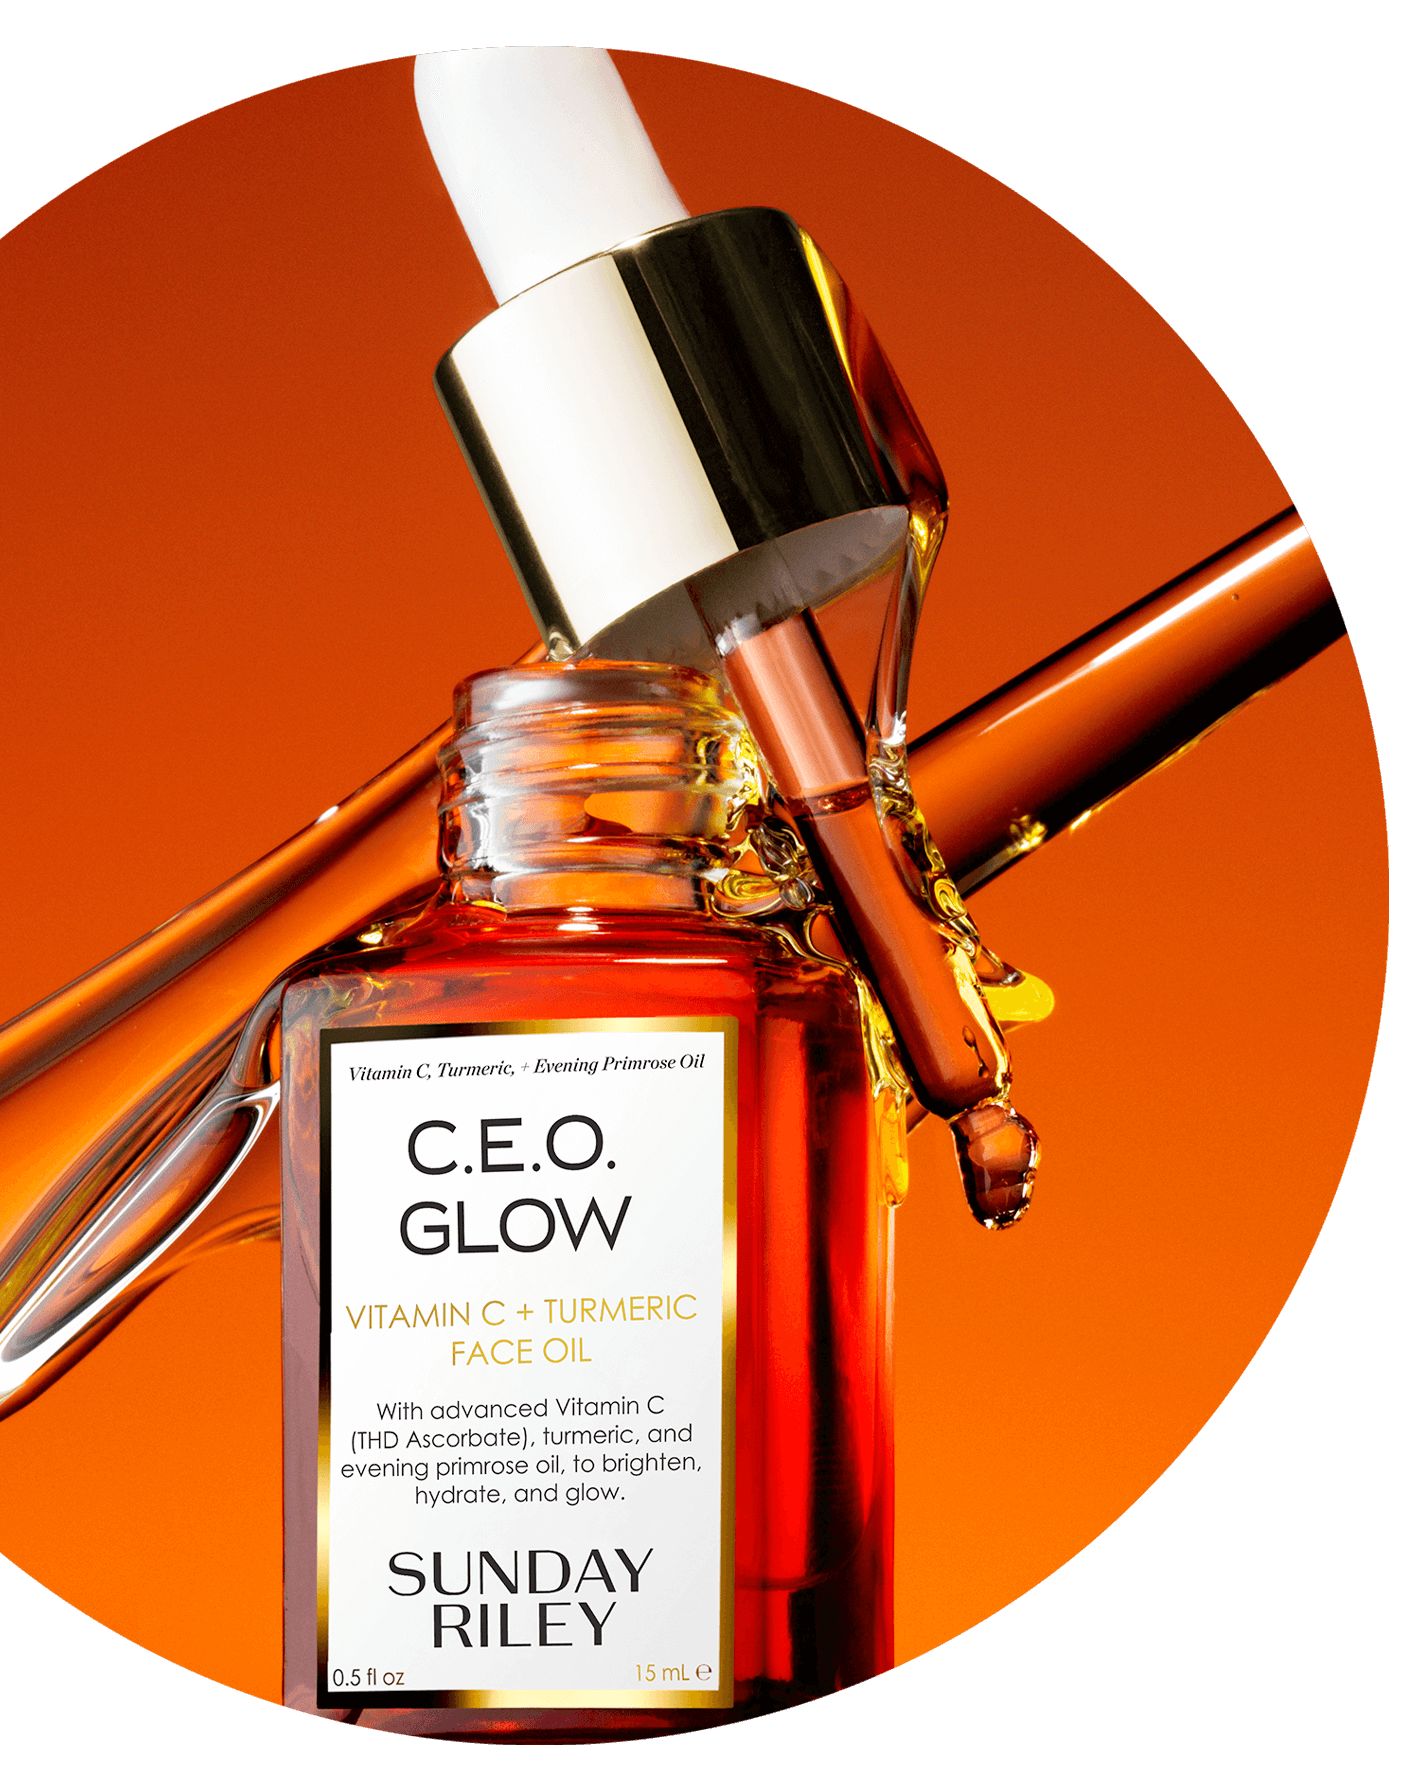 c.e.o. glow vitamin c + turmeric face oil bottle with dropper